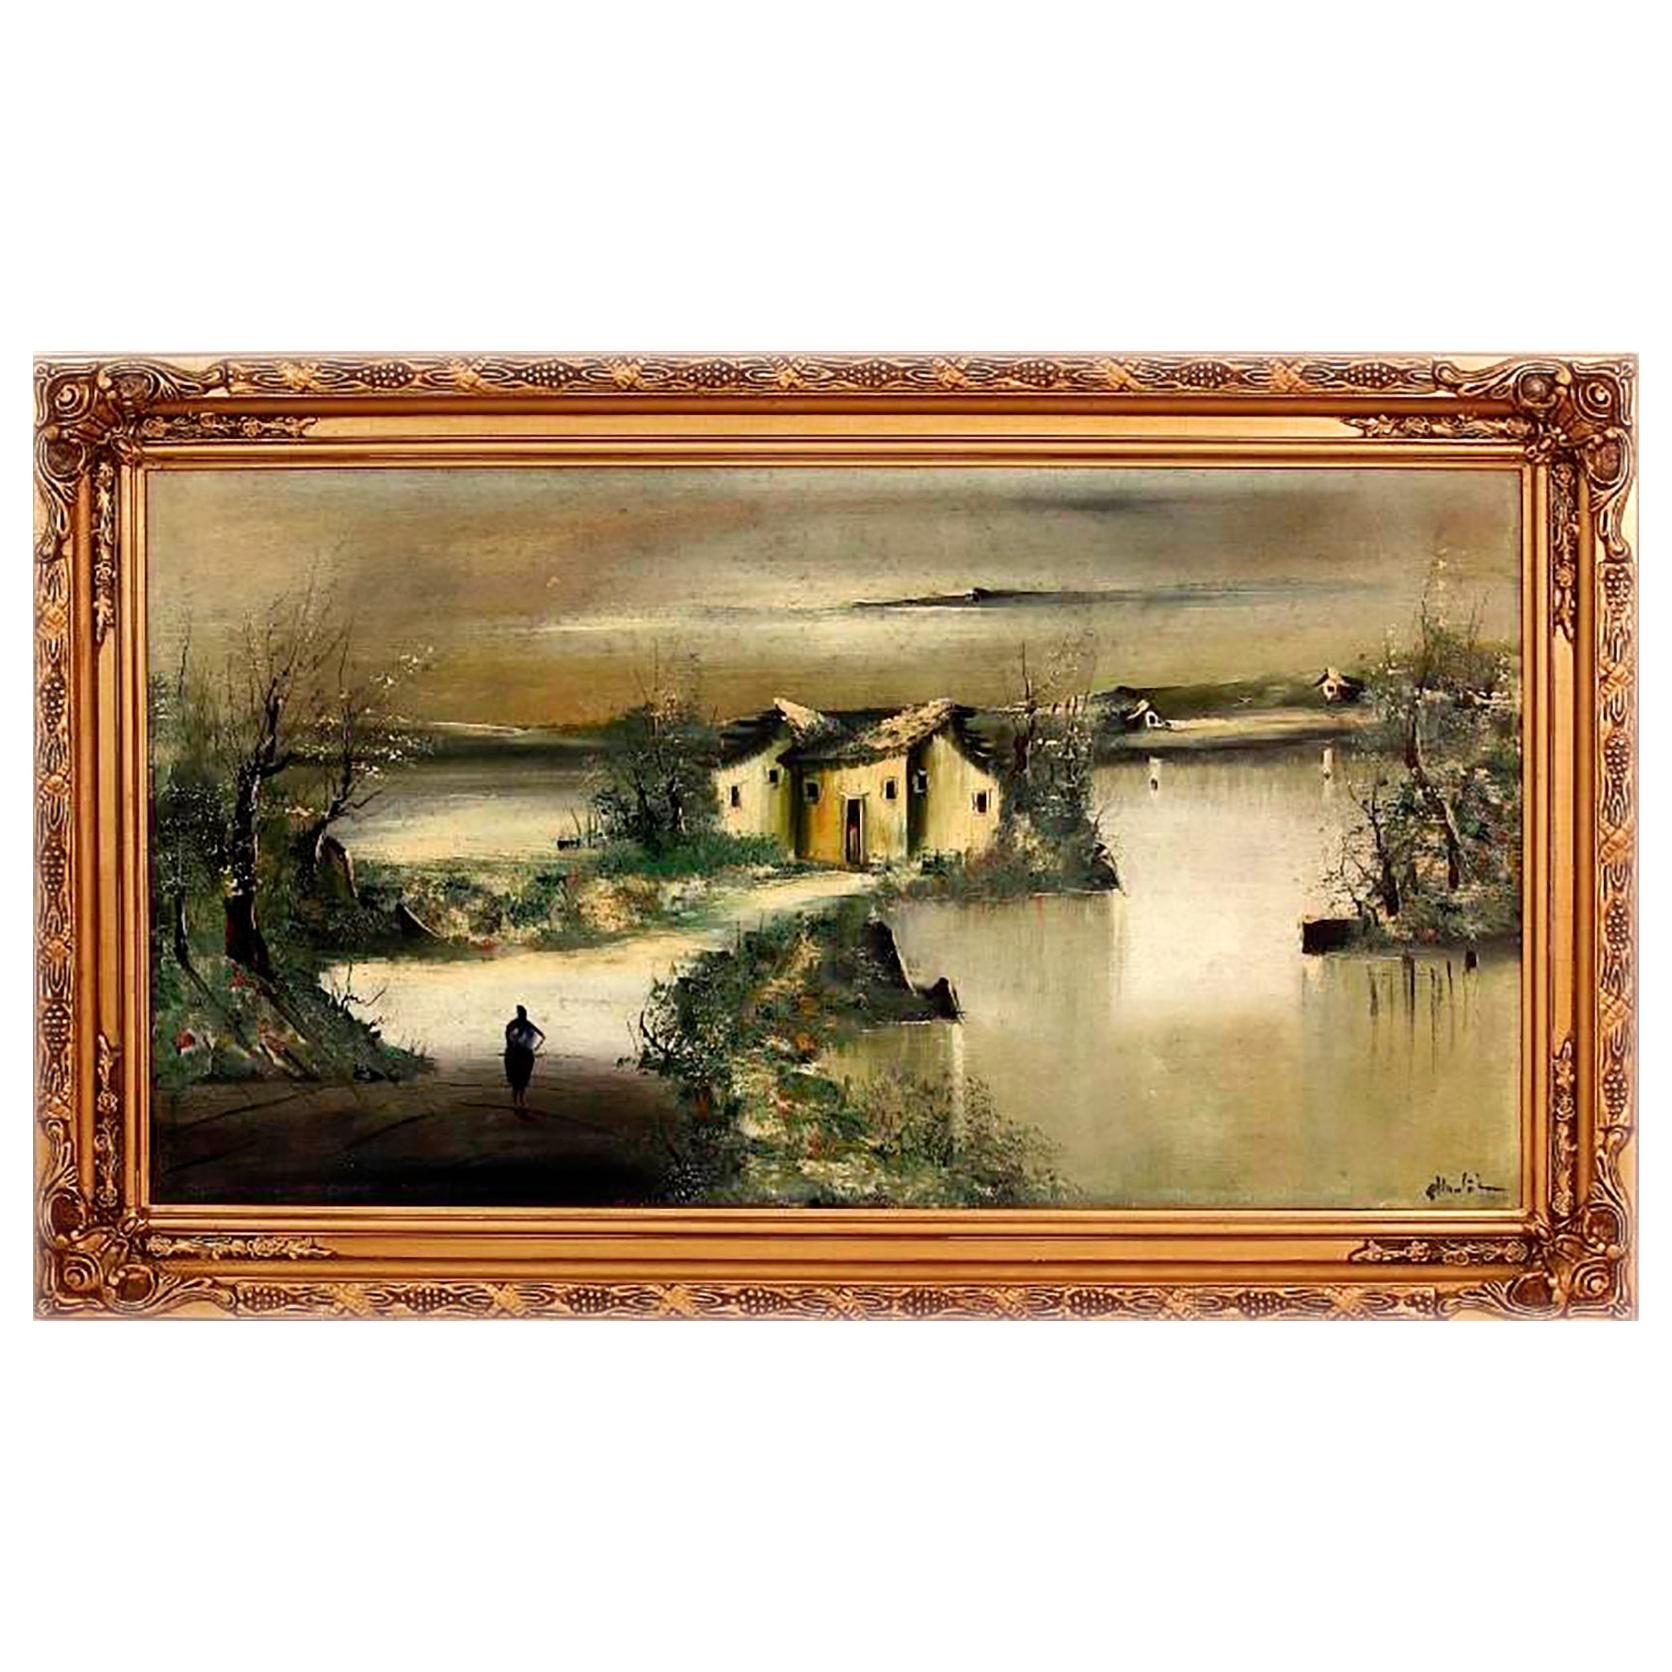 Großes impressionistisches Ölgemälde auf Leinwand, signiert A. Huntington, „Houses And River“